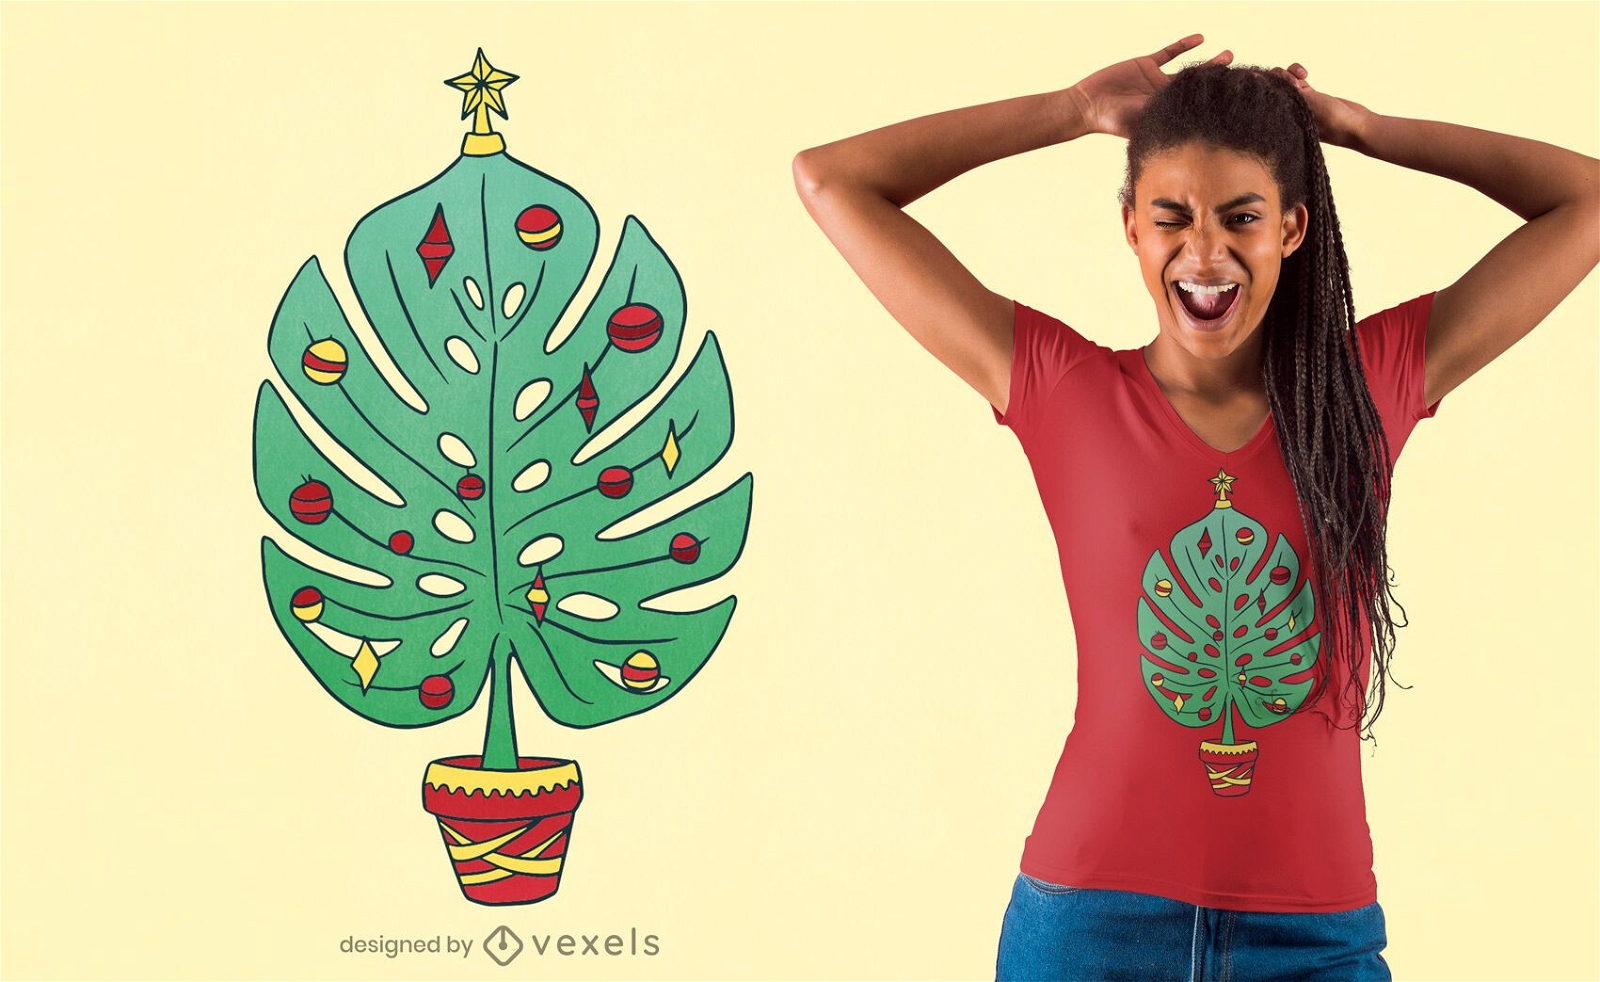 Monstera christmas tree t-shirt design